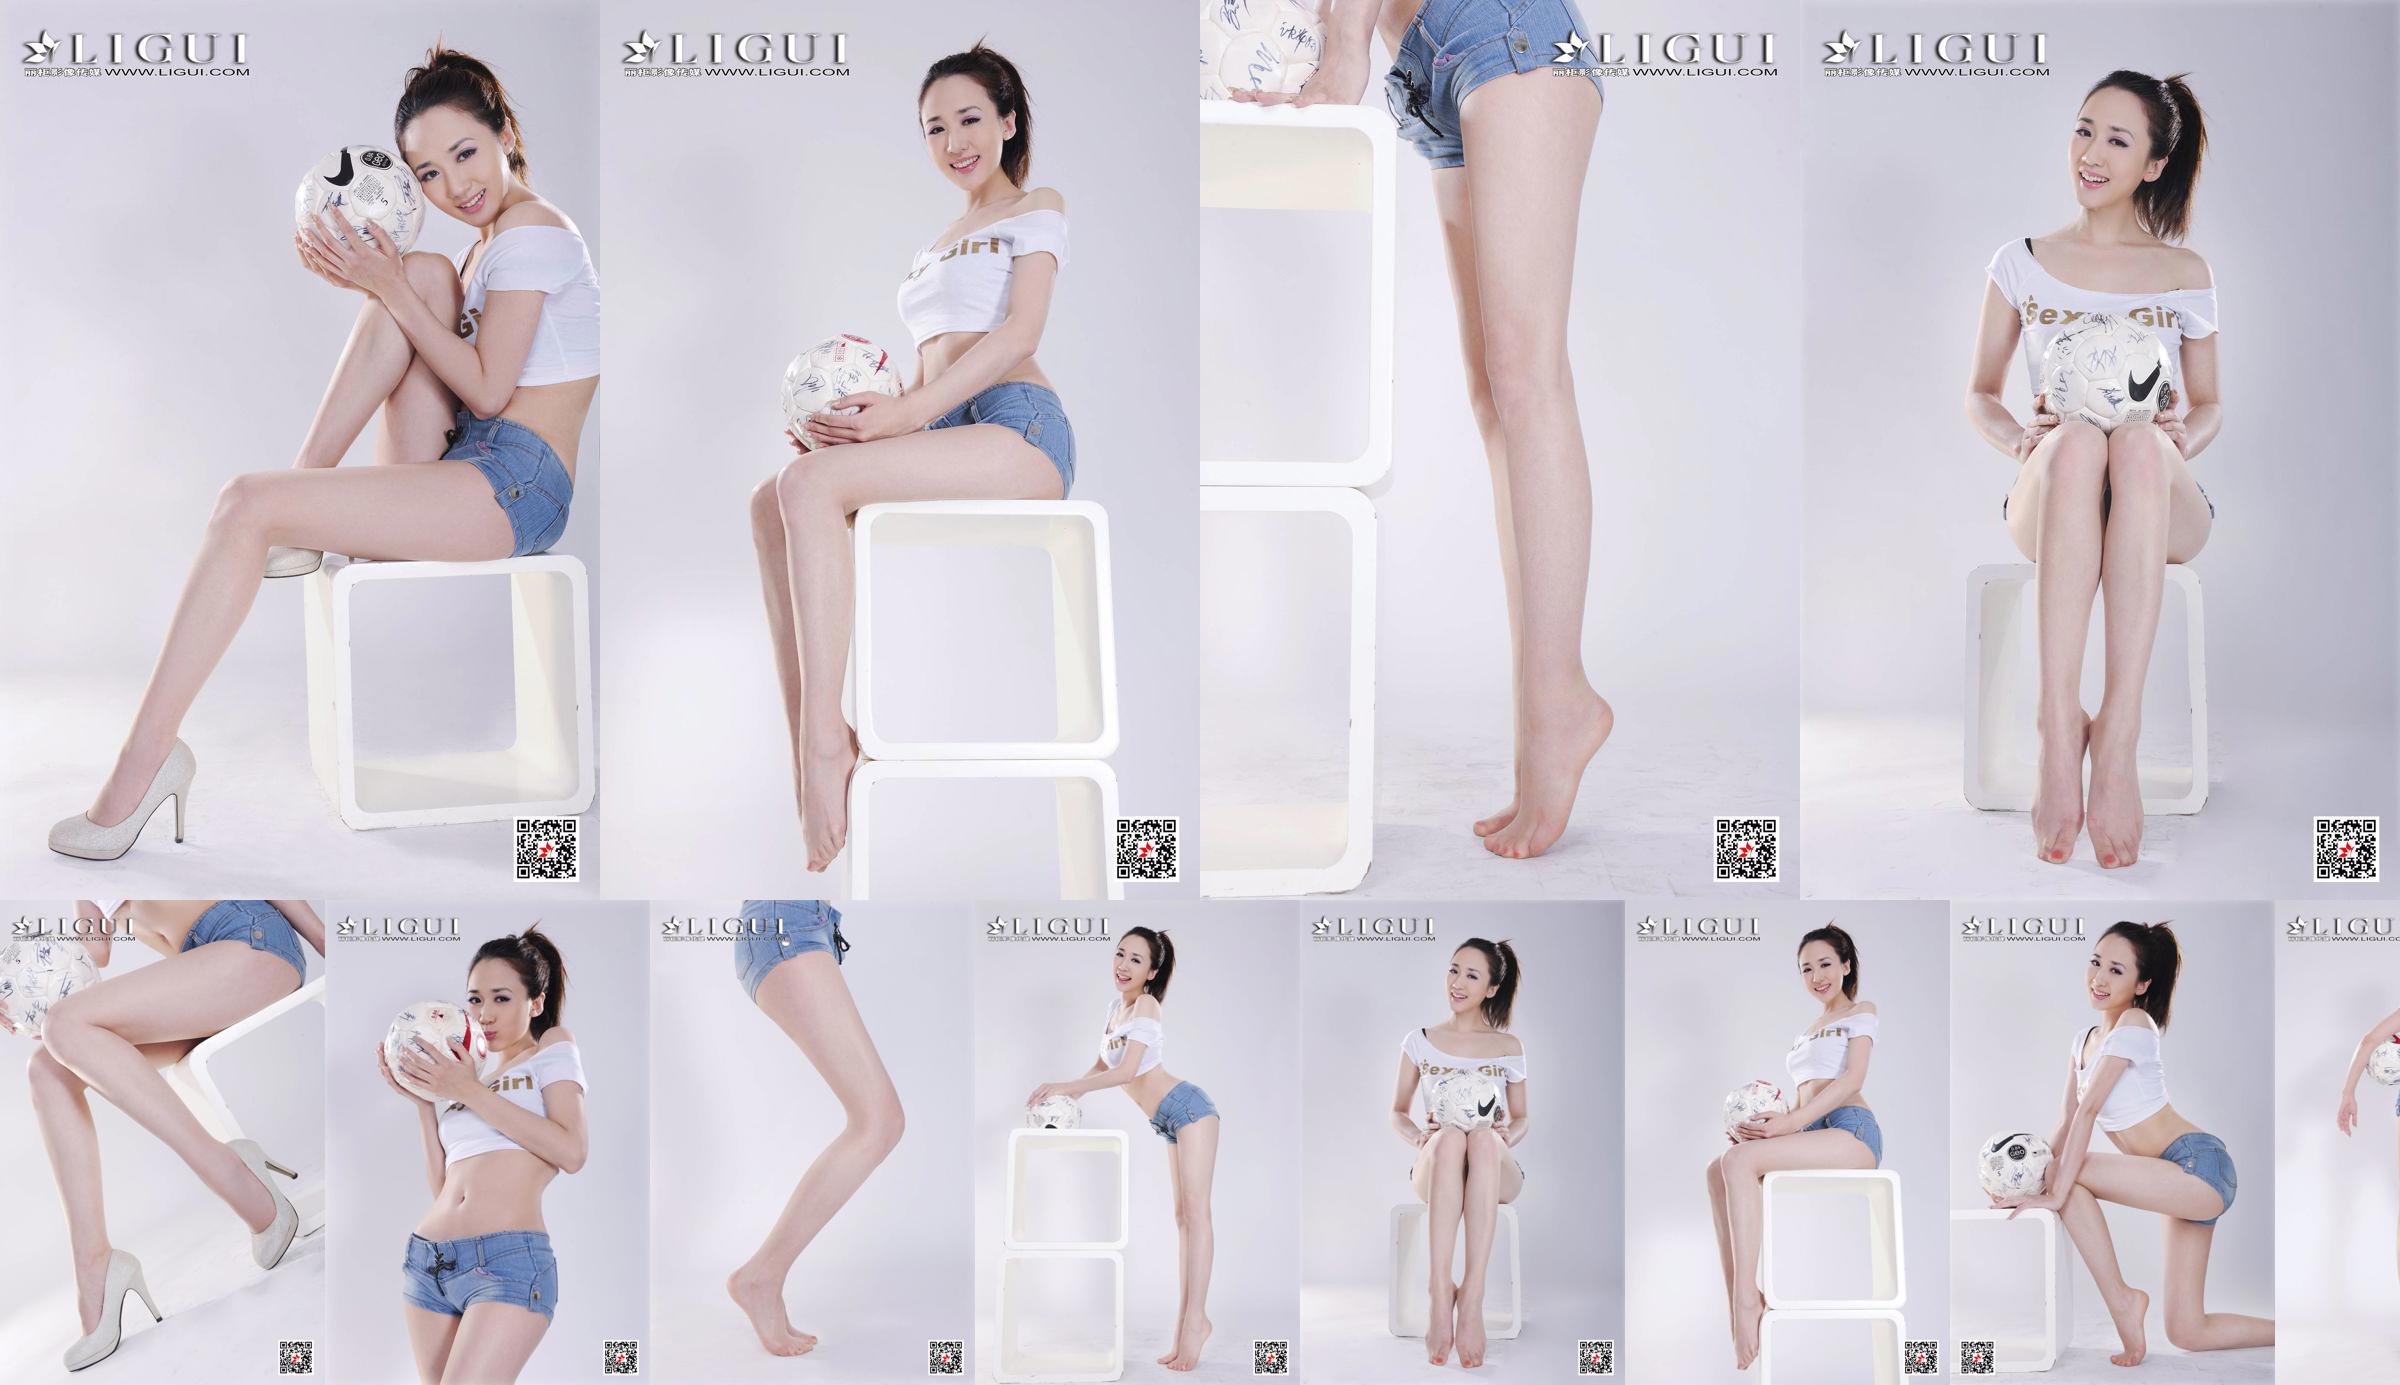 Model Qiu Chen "Super Short Hot Pants Football Girl" [LIGUI] No.4cbf28 Page 4